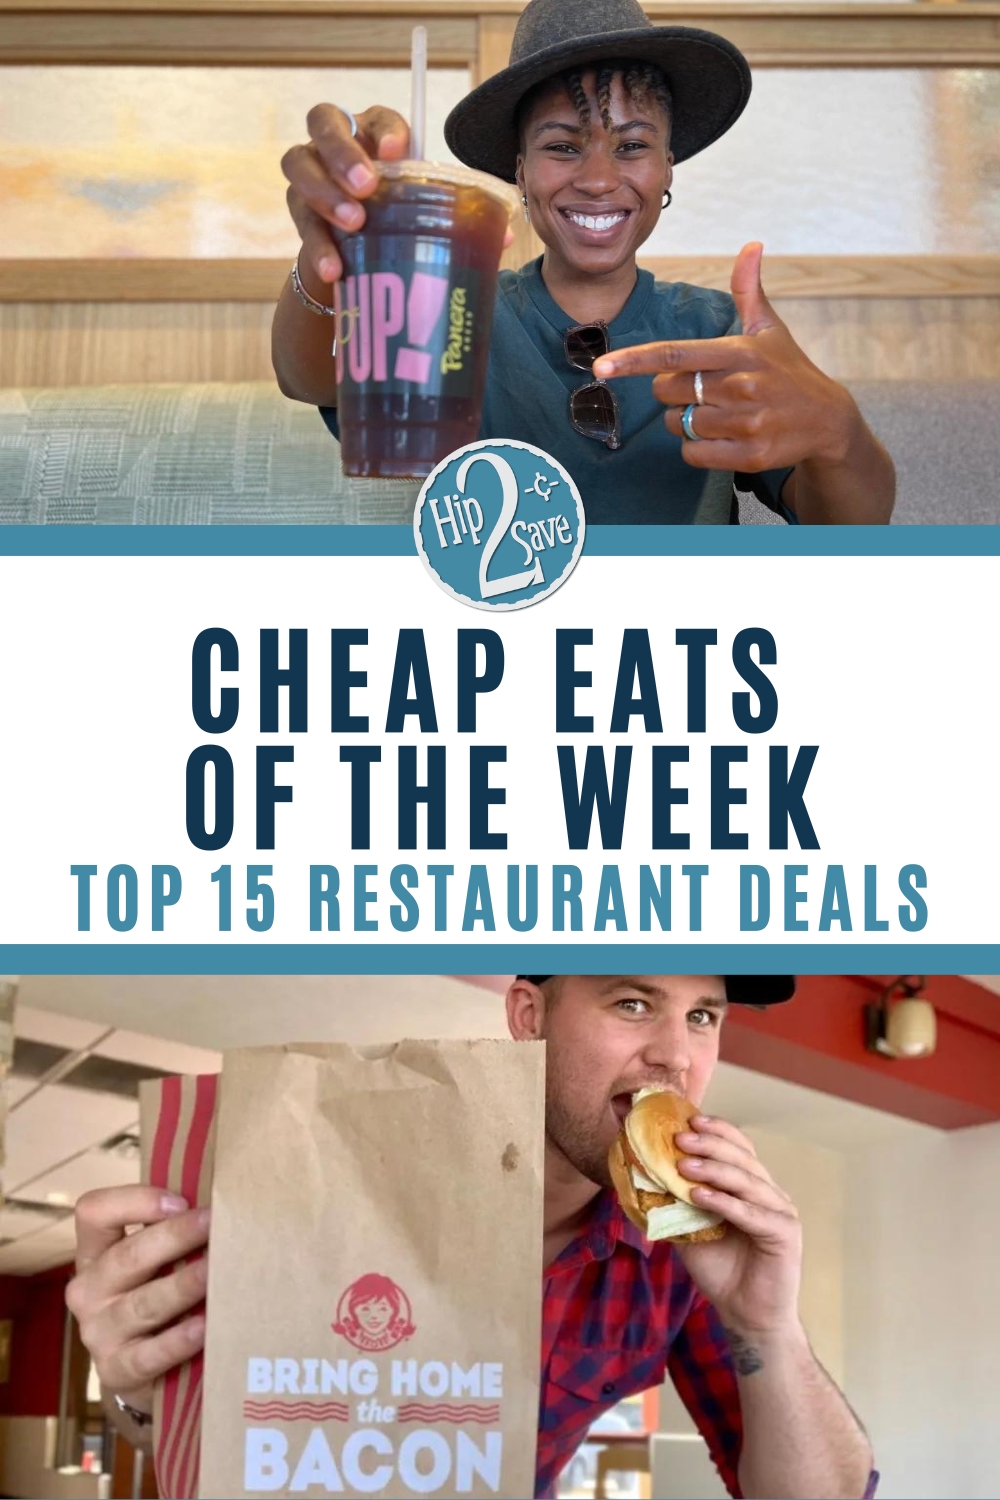 Cheapest Menu Items at Fast Food Restaurants